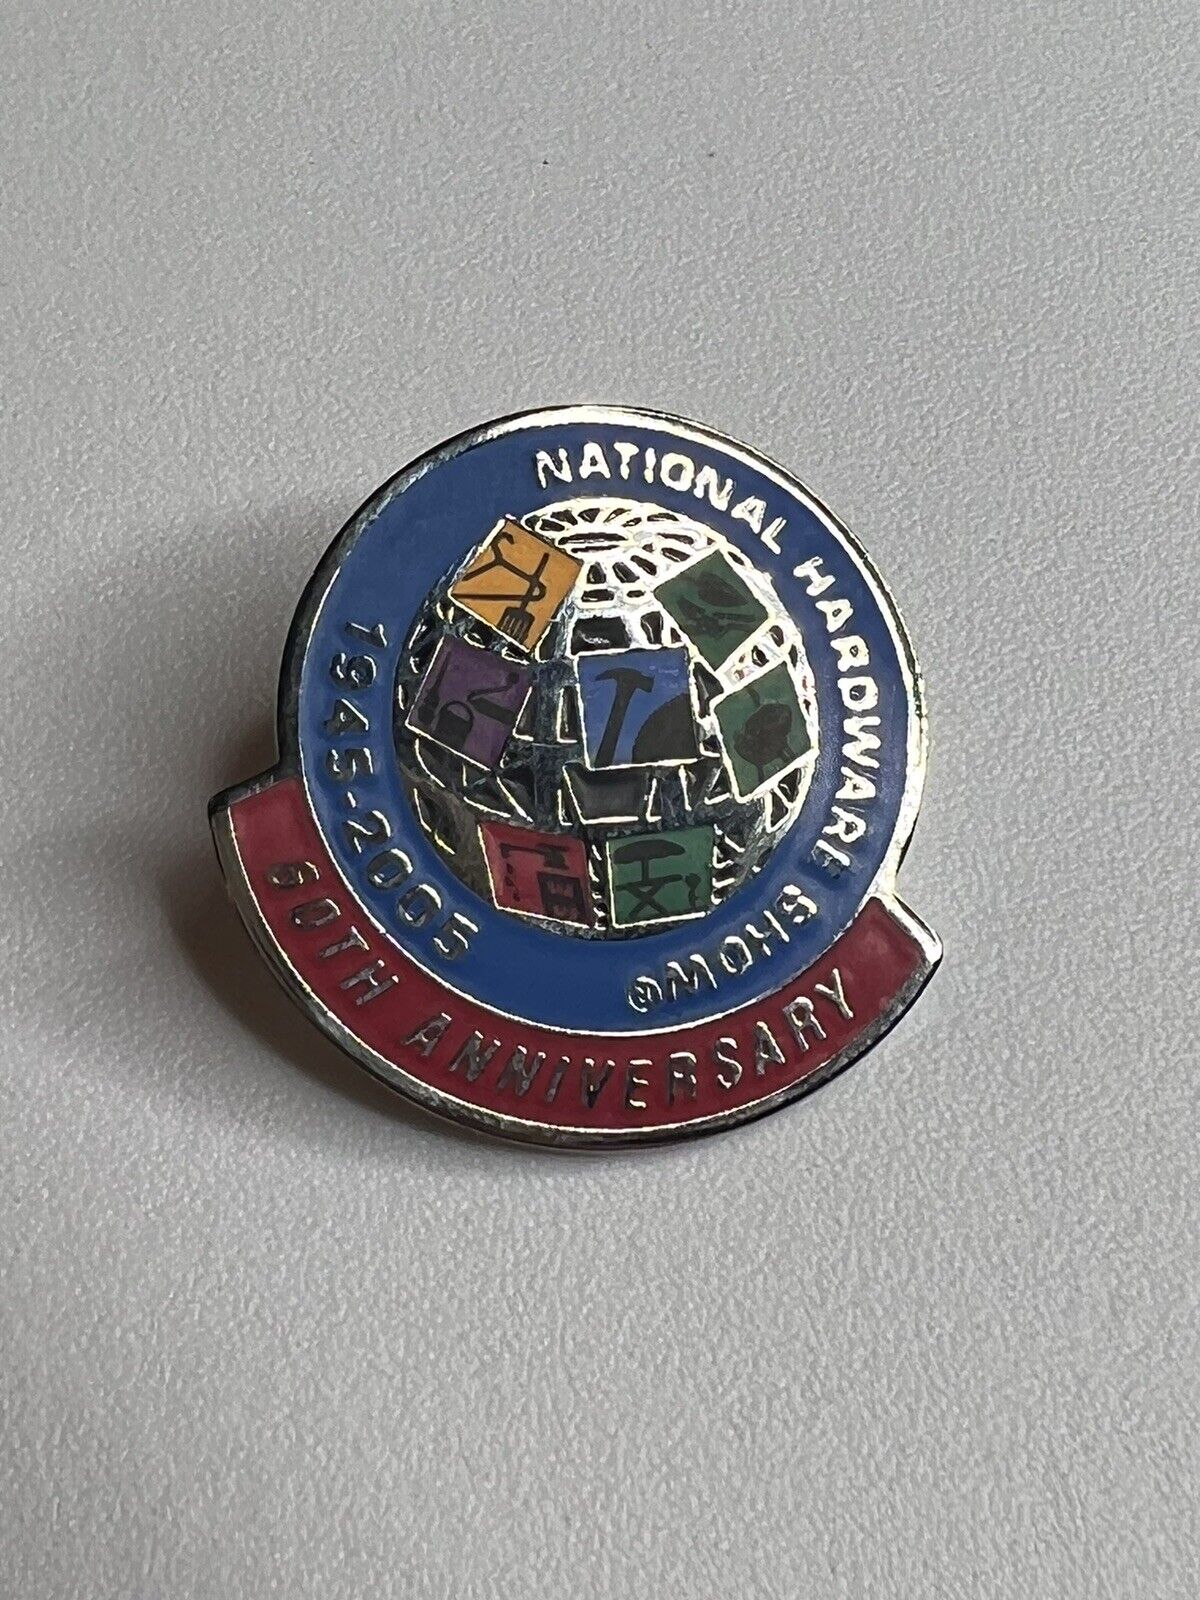 NHS 2005 National Hardware Shows 60th Anniversary Enamel Lapel Pin Souvenir